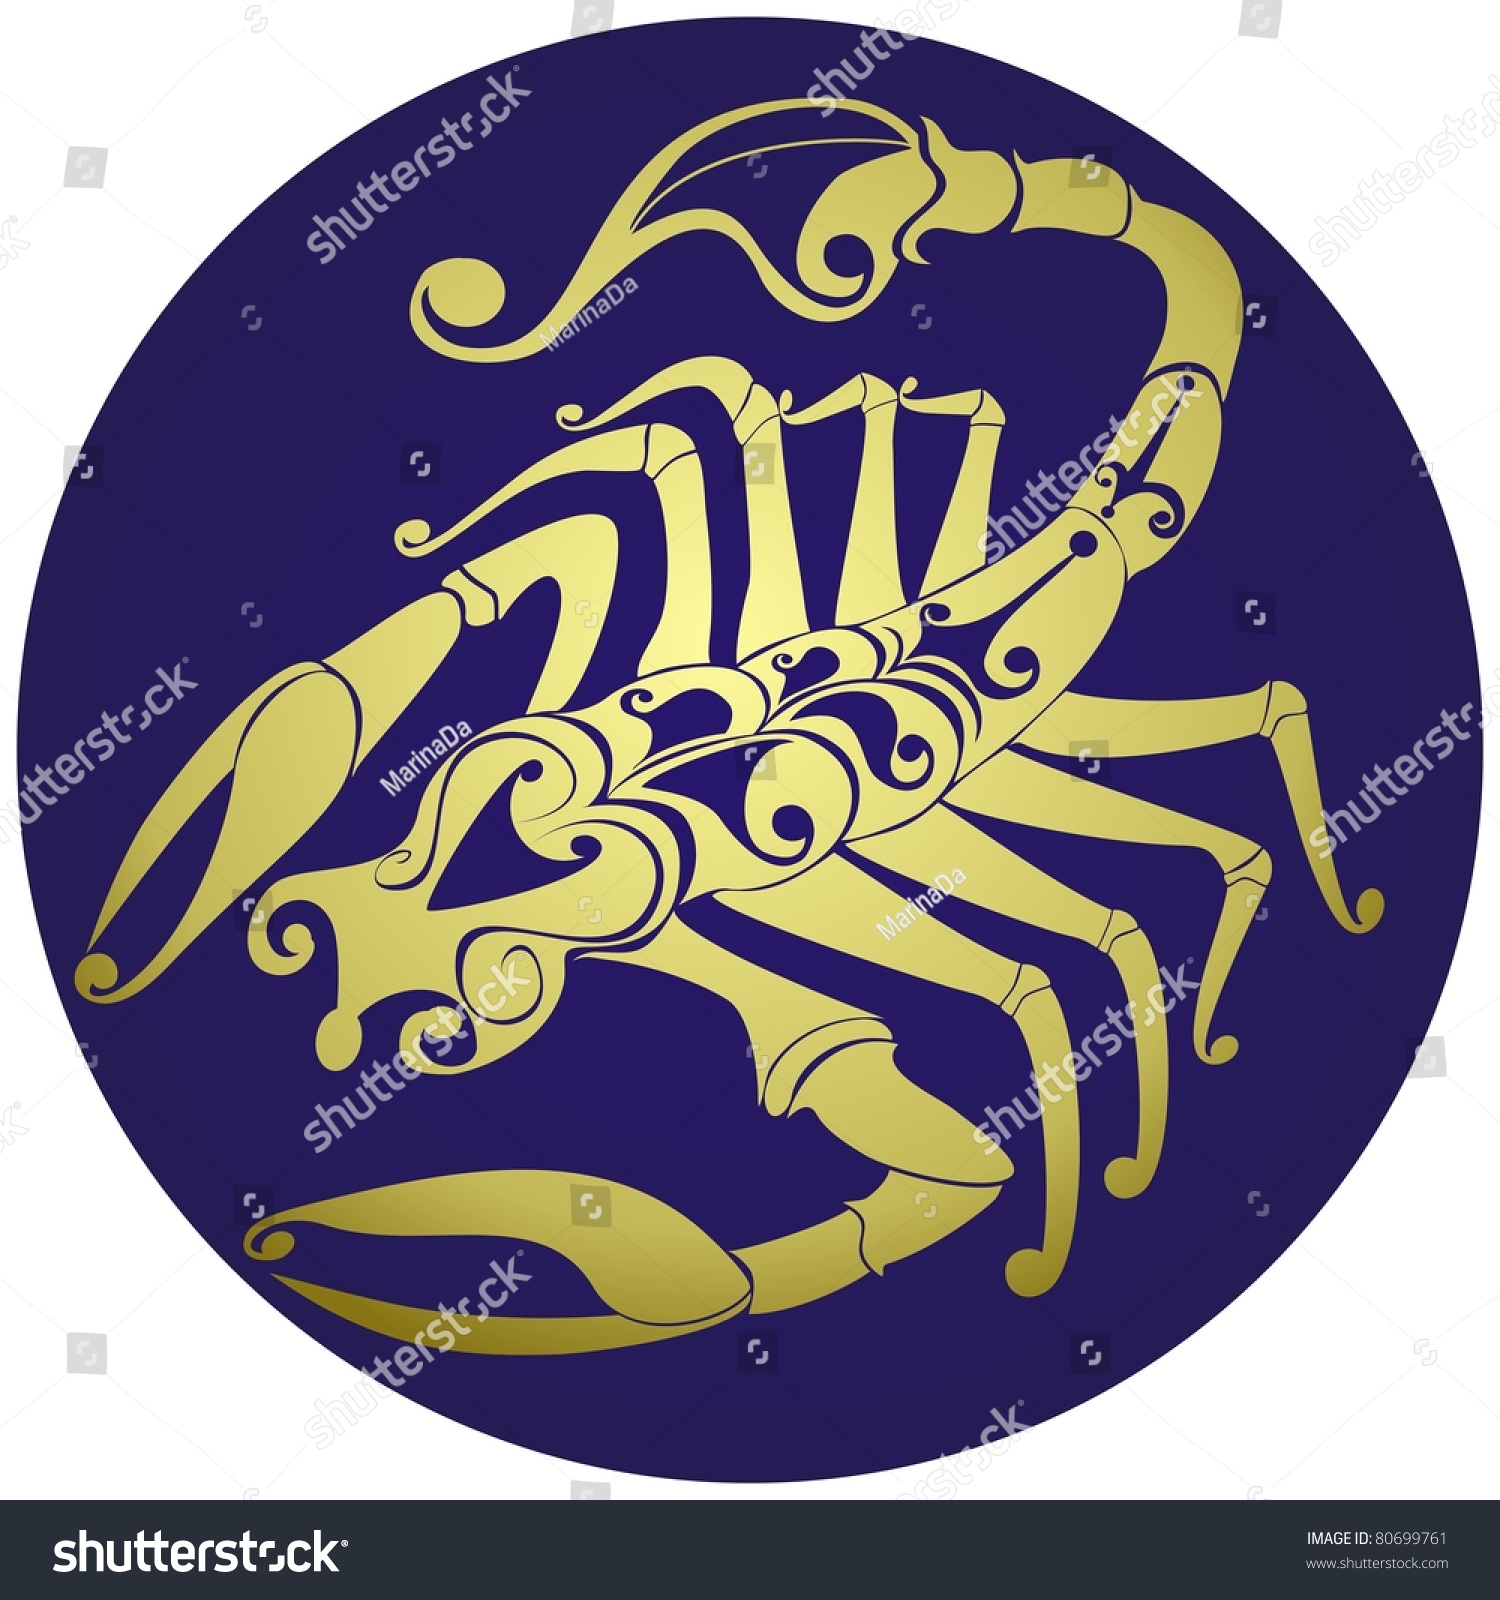 Scorpio Astrology Sign Stock Illustration 80699761 - Shutterstock